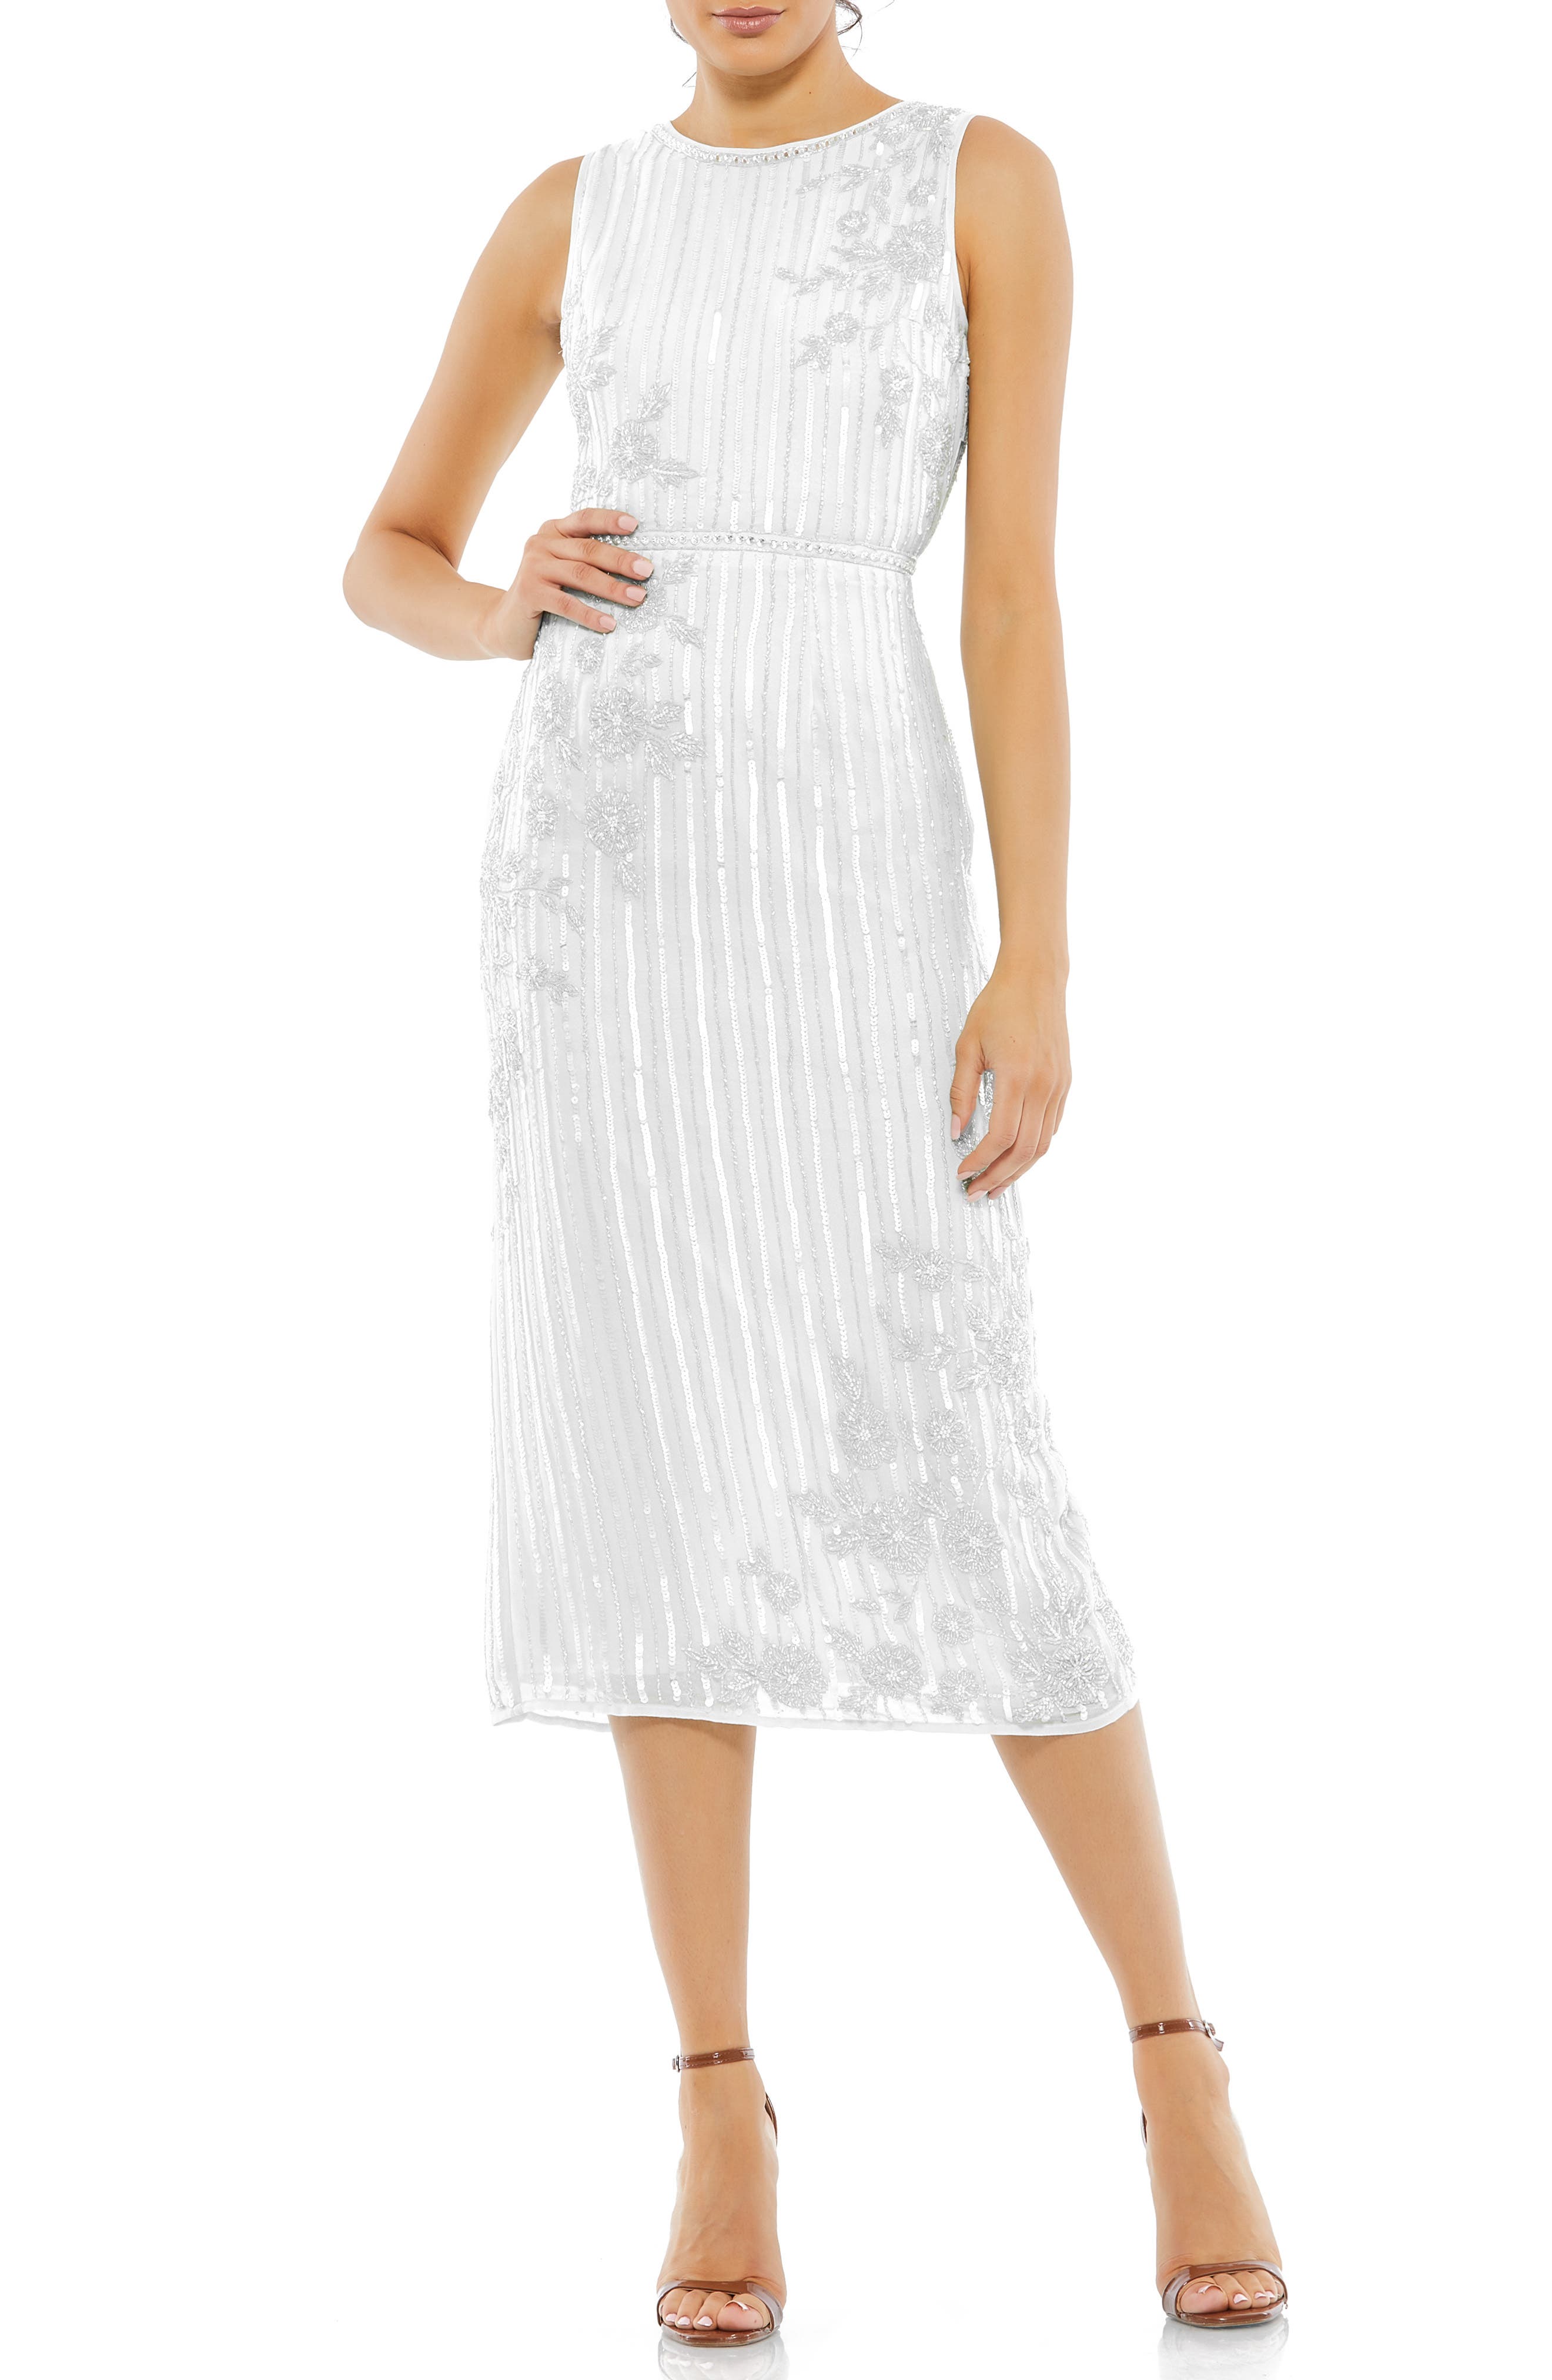 White Cocktail Dresses ☀ Party Dresses ...